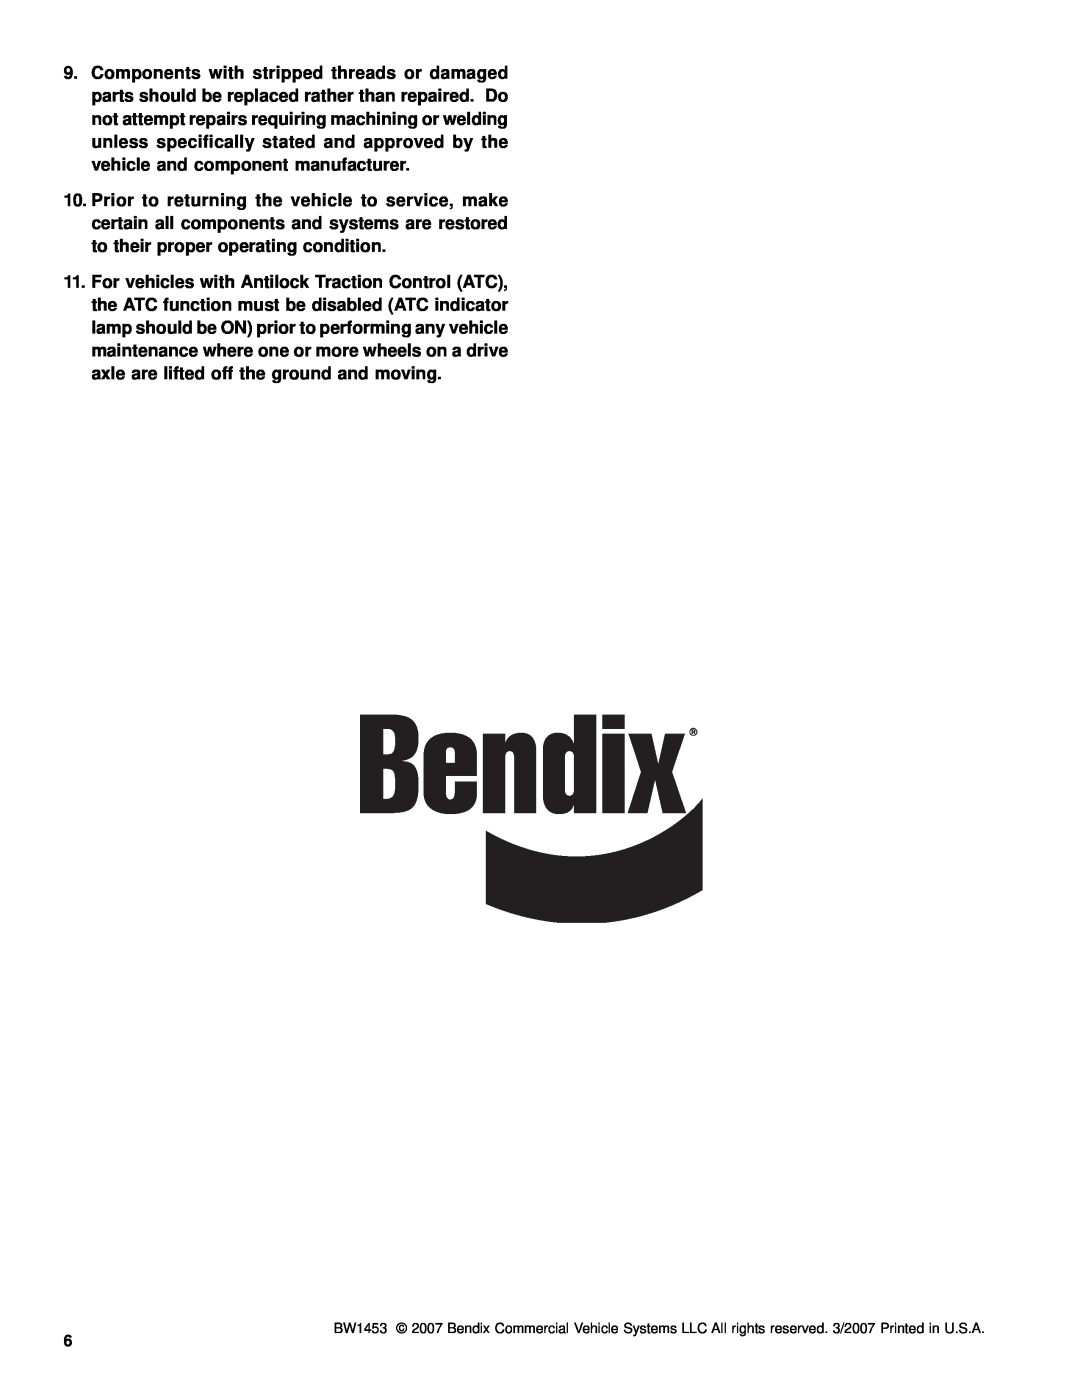 BENDIX SD-05-1200 manual 